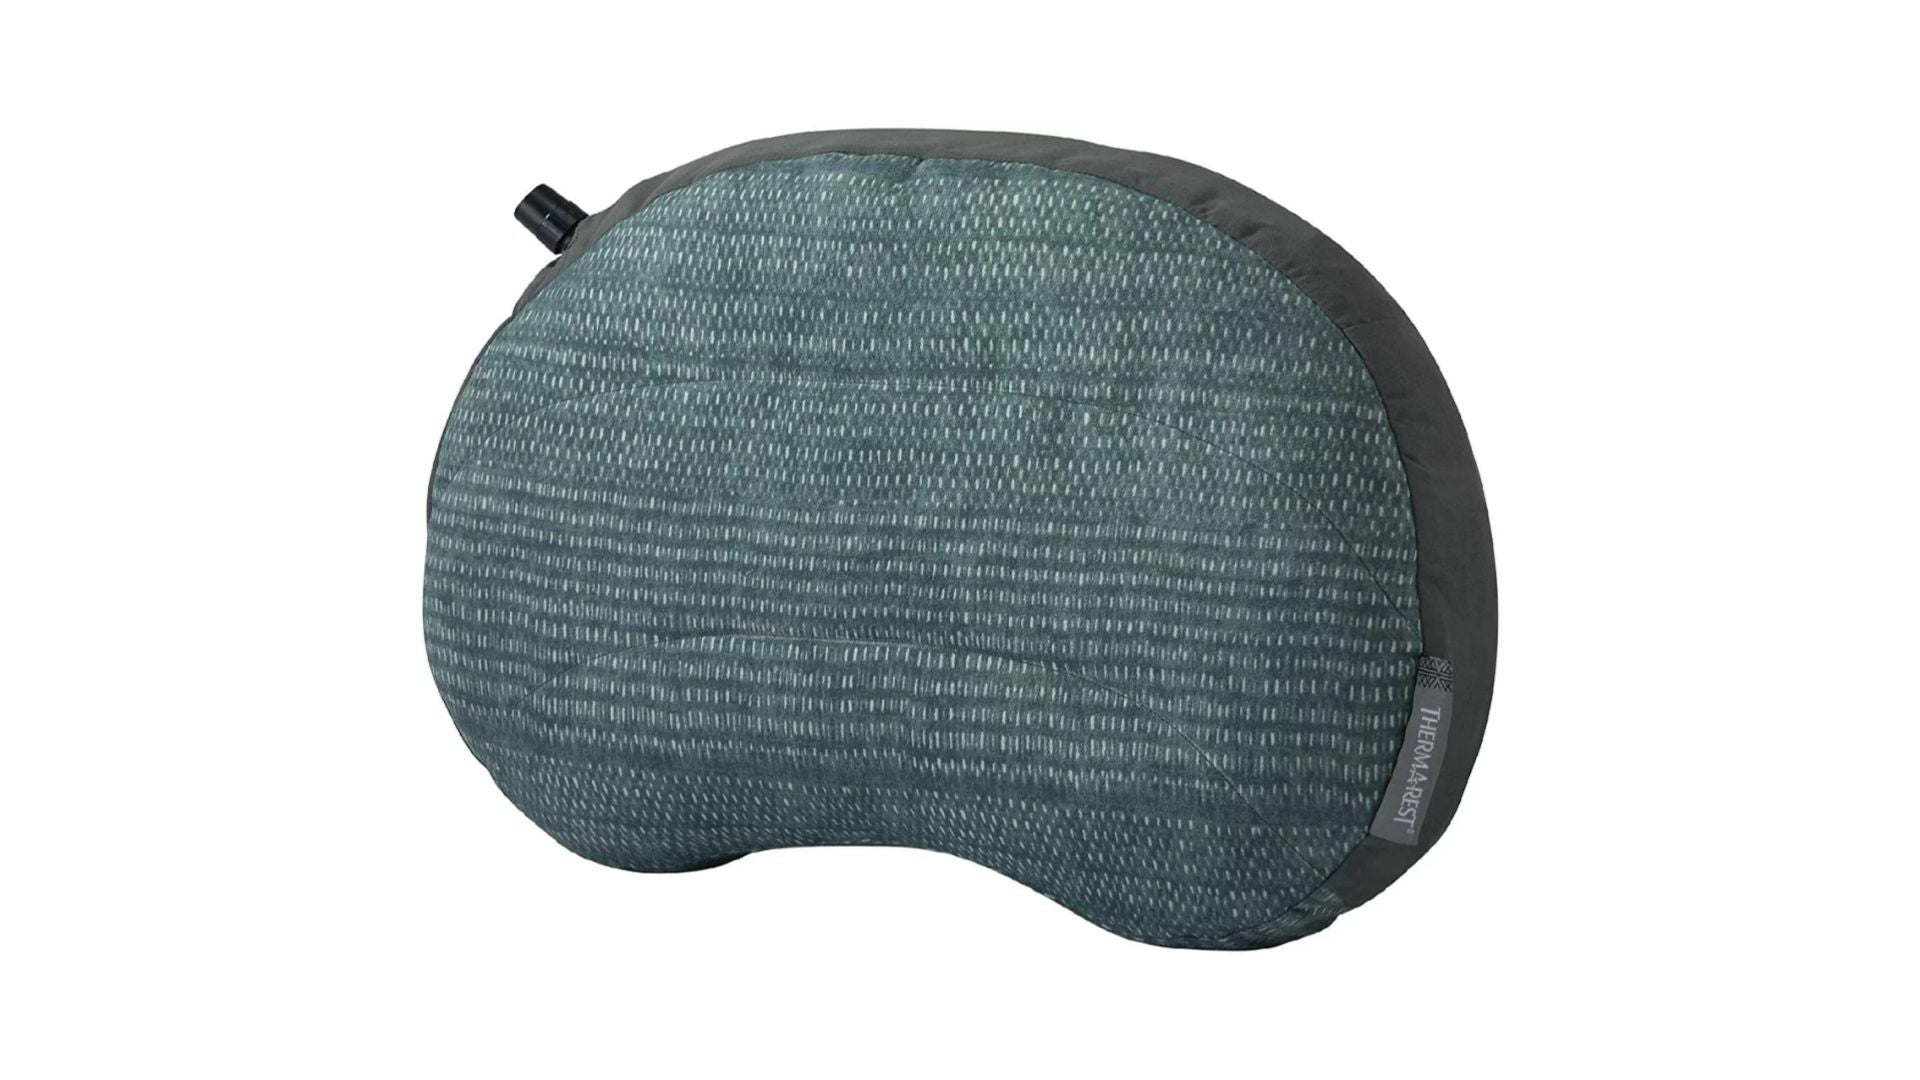 Therm-a-Rest Air Head Pillow